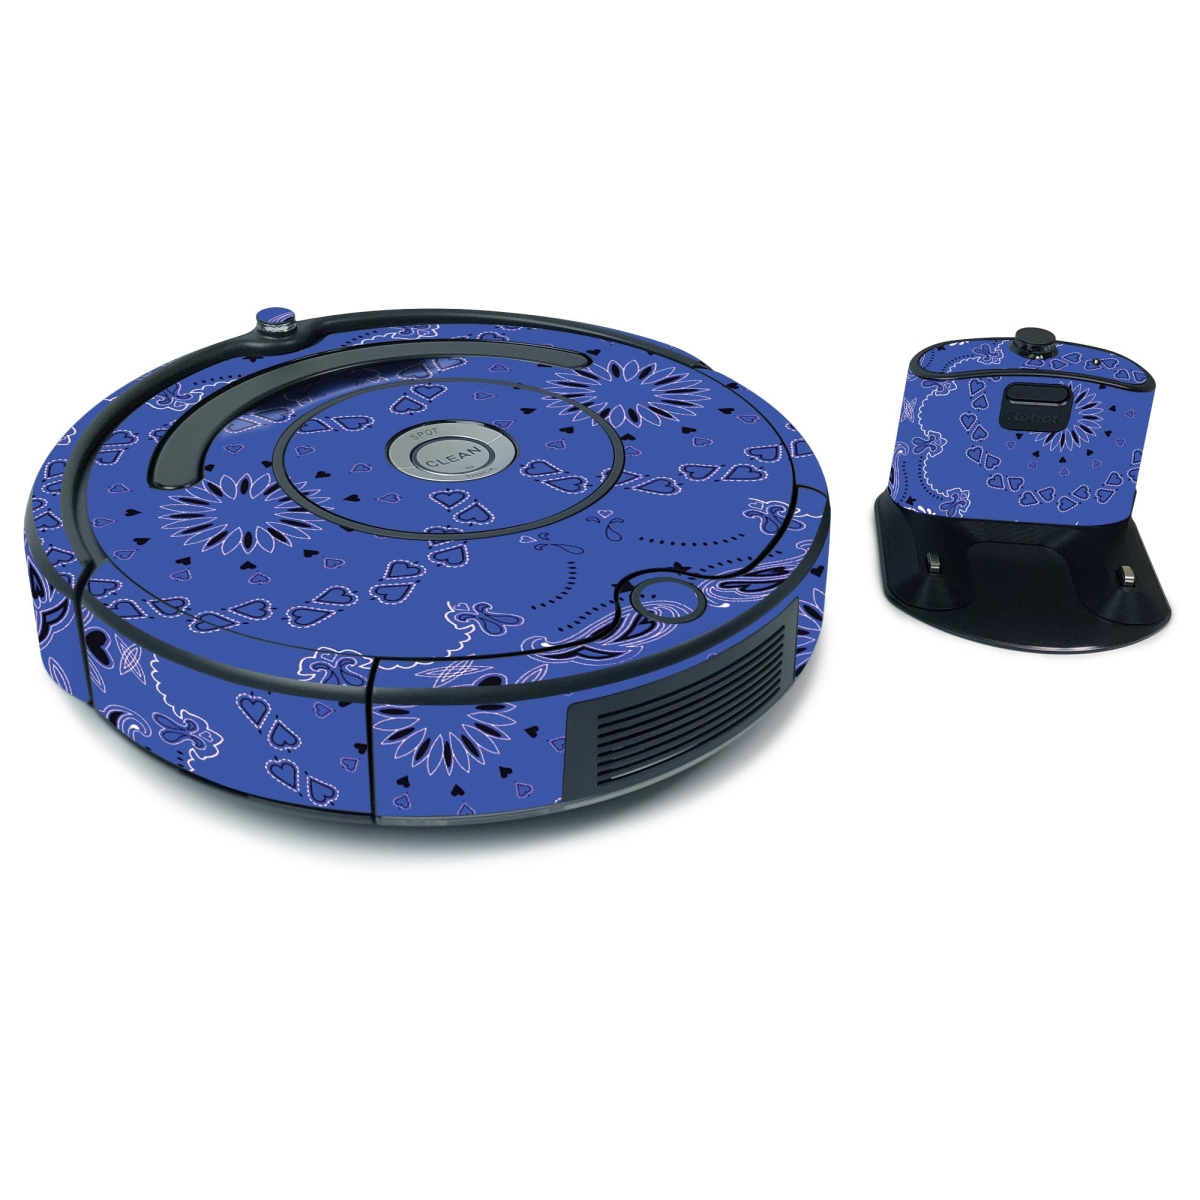 Picture of MightySkins IRRO675-Blue Bandana Skin for iRobot Roomba 675 Max Coverage - Blue Bandana